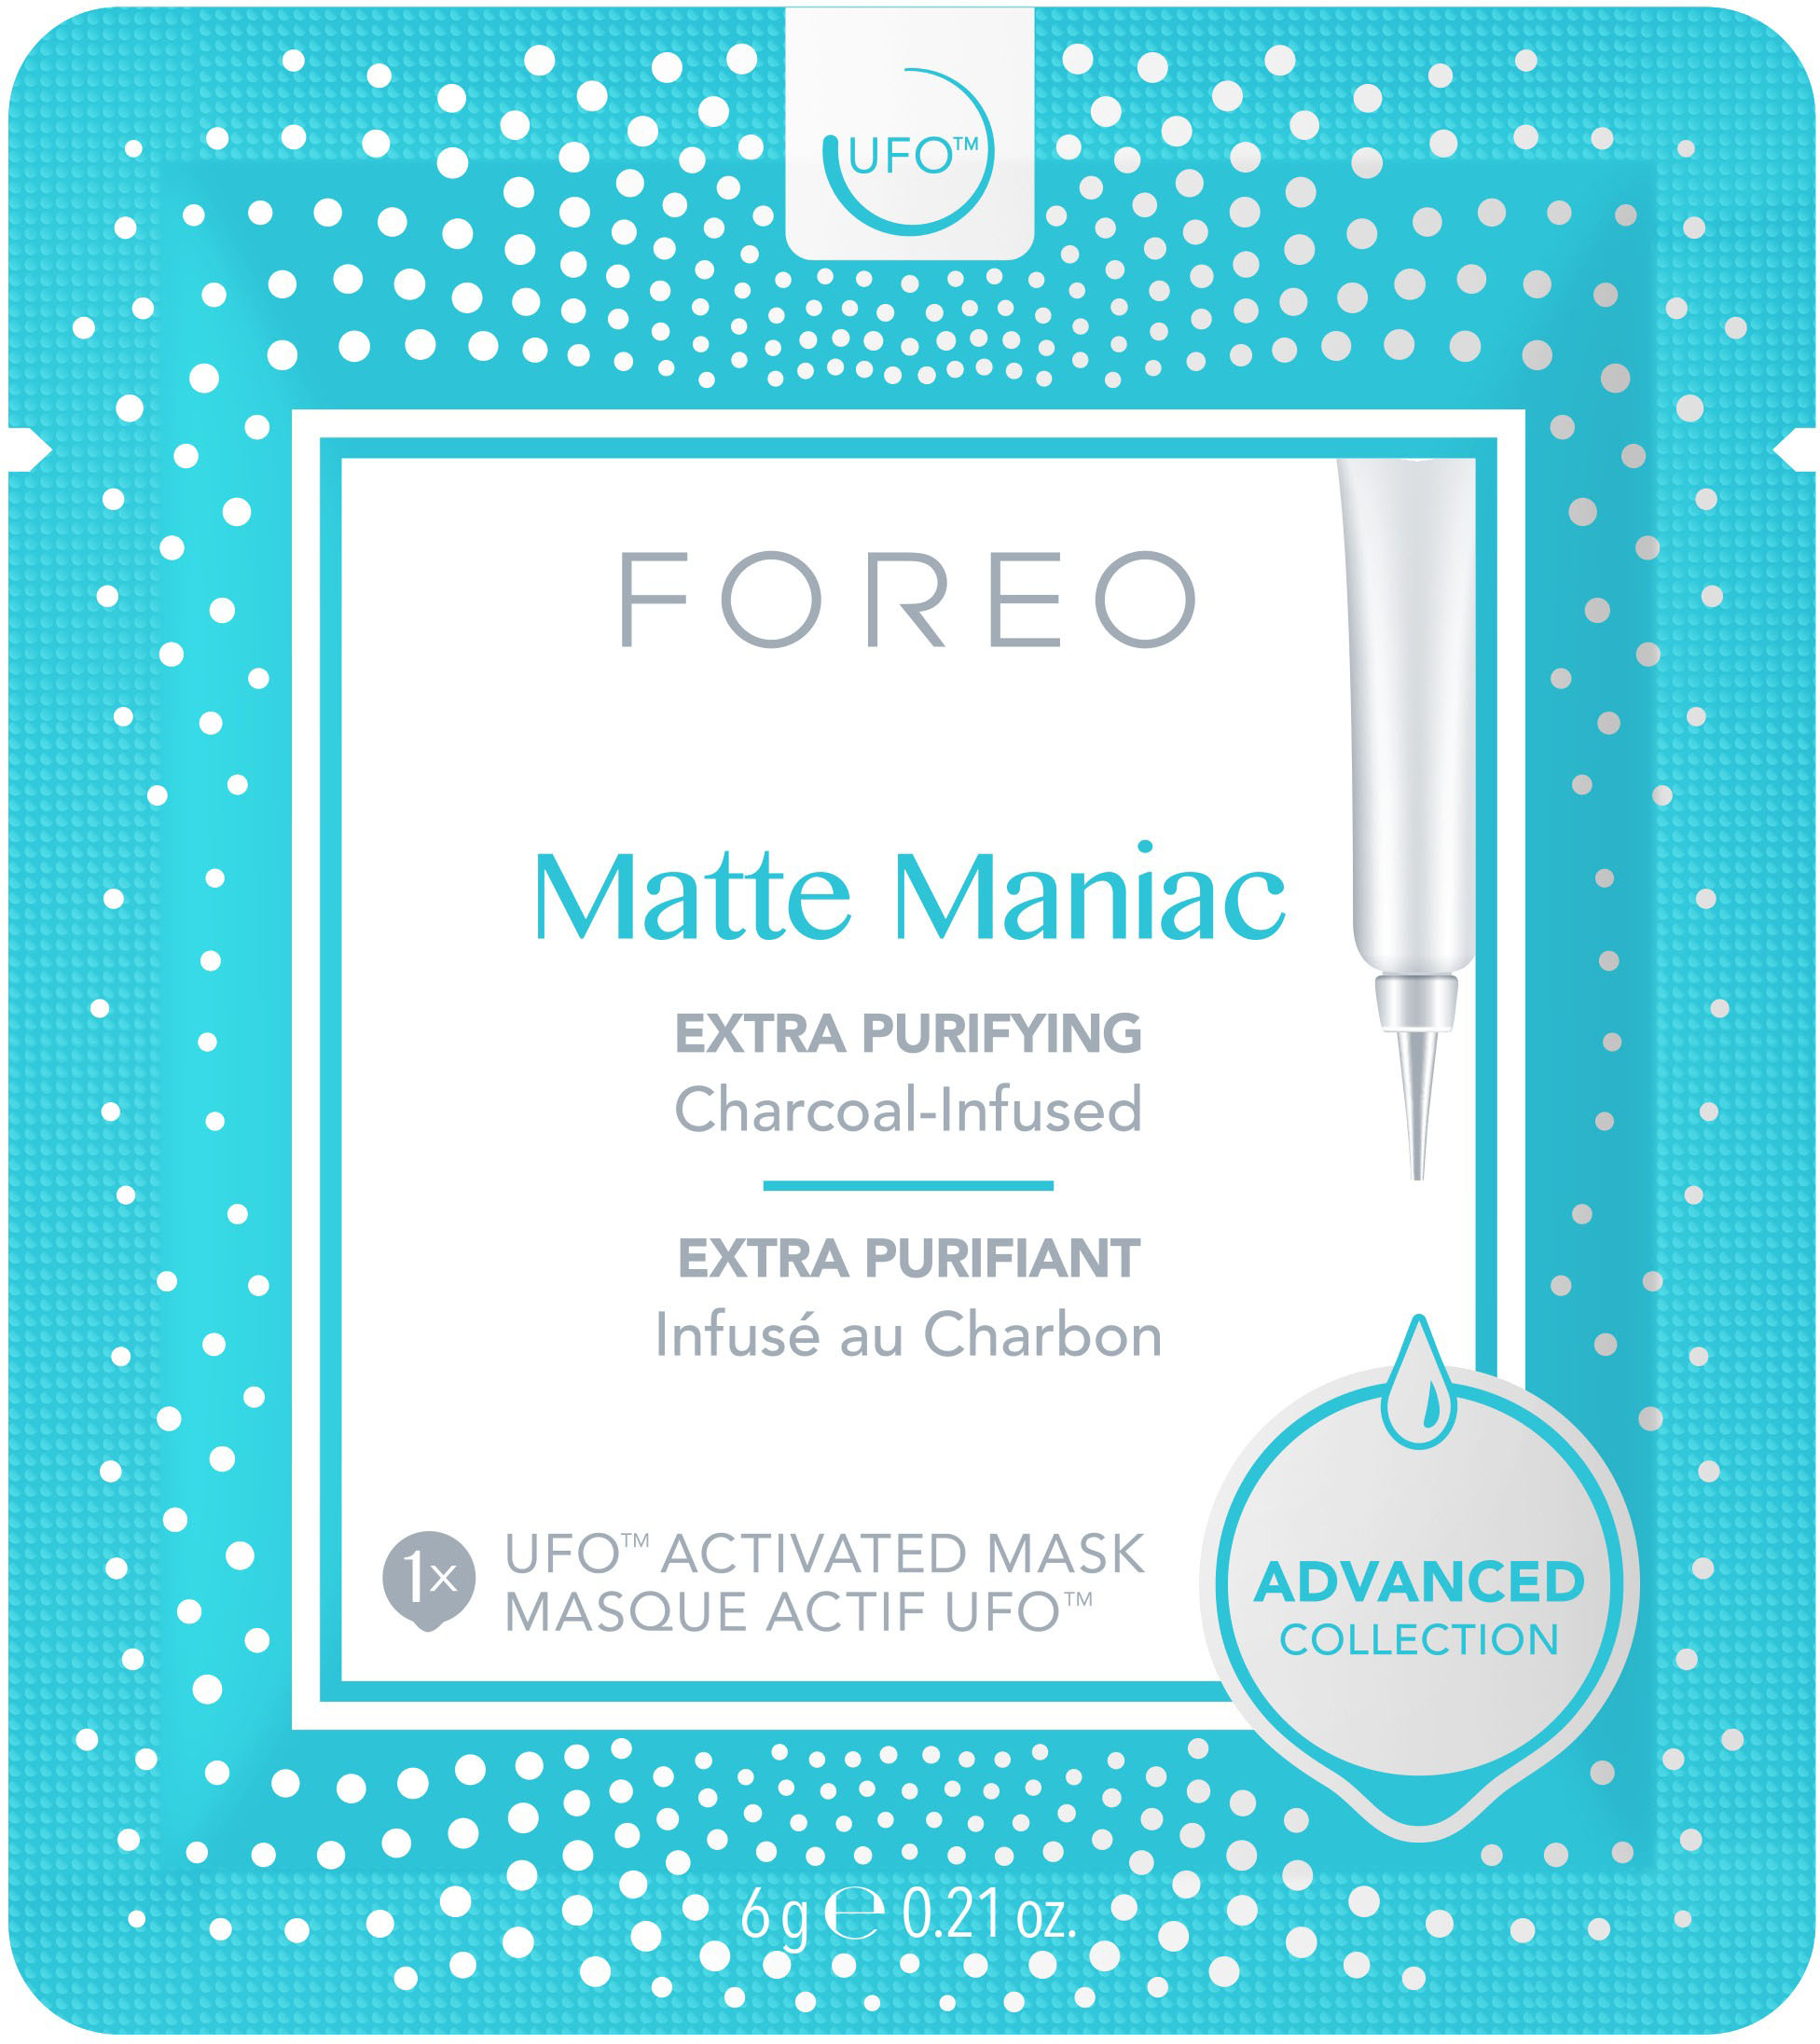 

FOREO - UFO Masks Matte Maniac x 6 - White